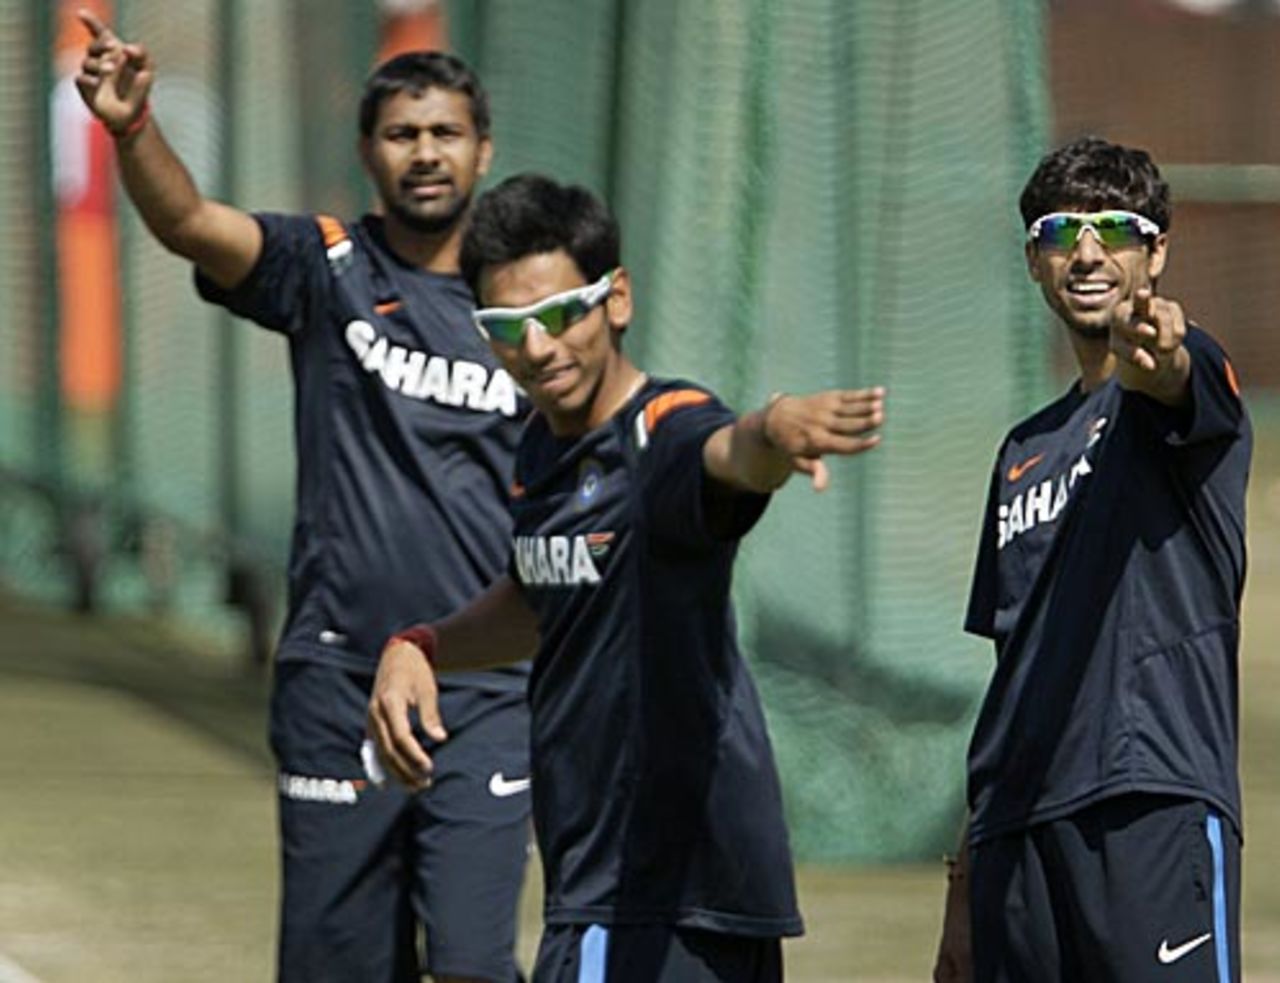 India's pace trio of Sudeep Tyagi, Praveen Kumar and Ashish Nehra during a training session, Jaipur, February 20